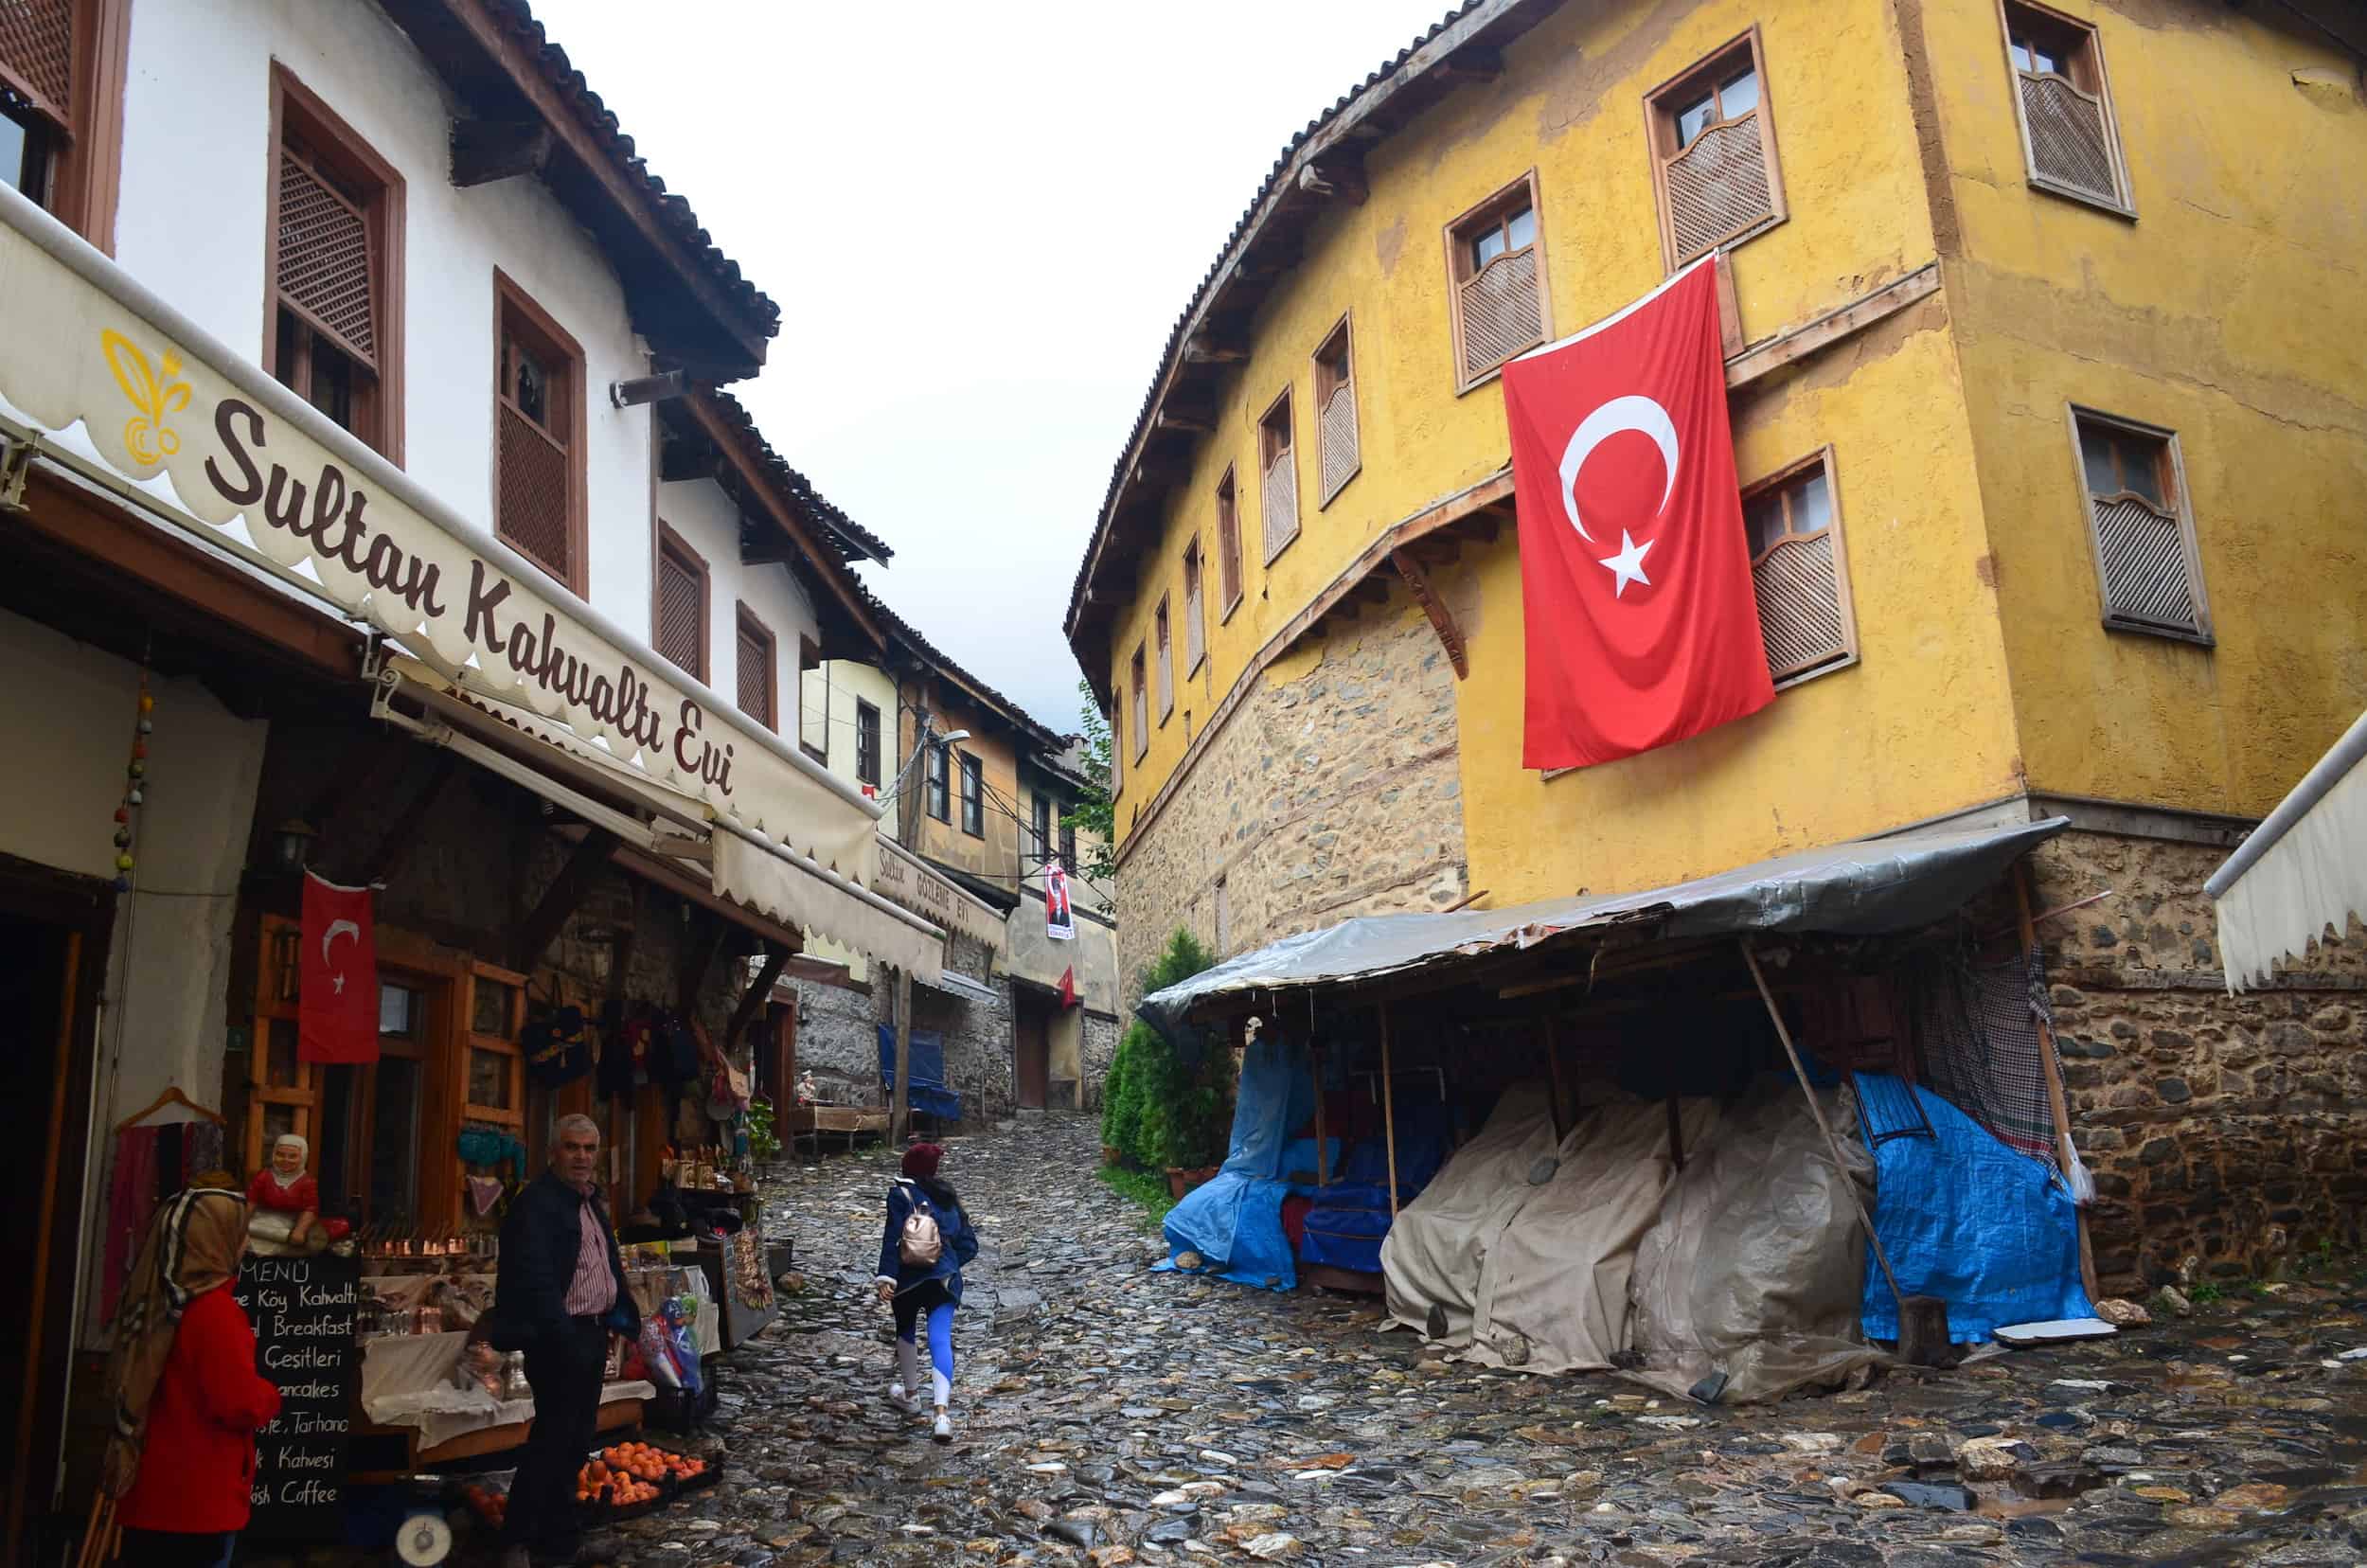 Main road into the village in Cumalıkızık, Bursa, Turkey